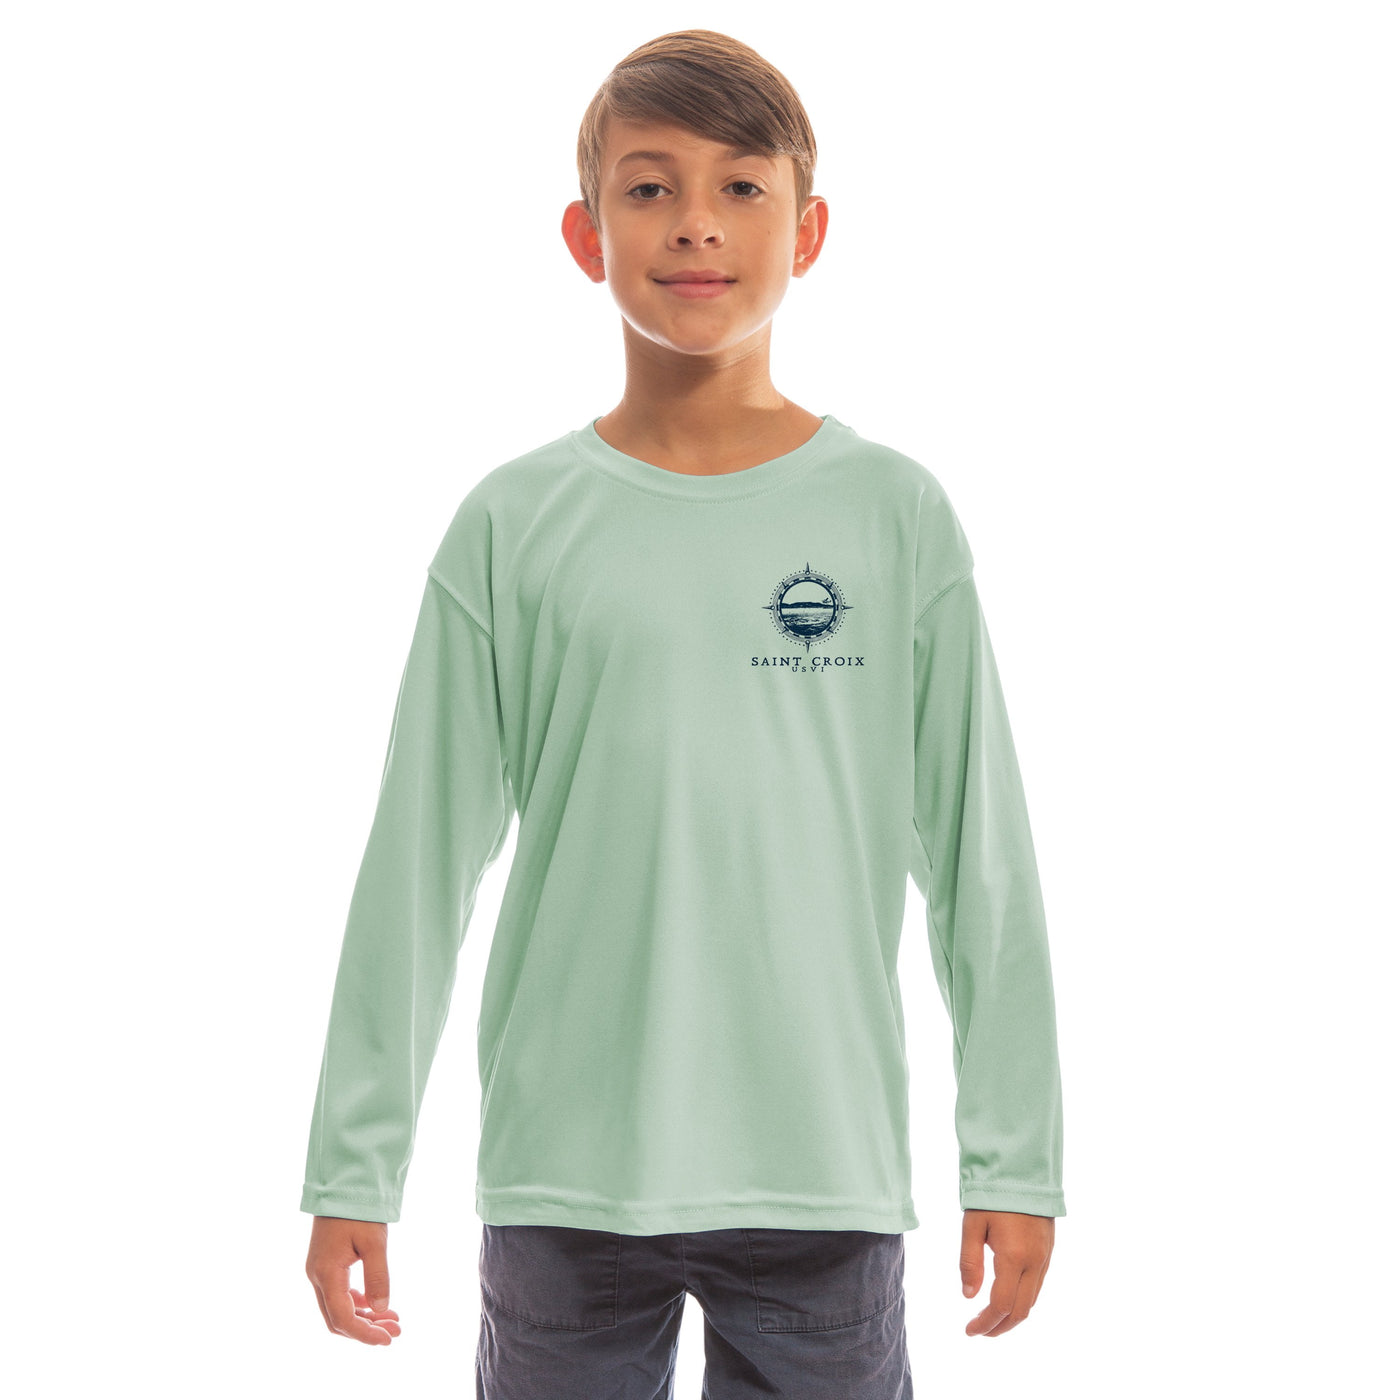 Compass Vintage Saint Croix Youth UPF 50+ UV/Sun Protection Long Sleeve T-Shirt